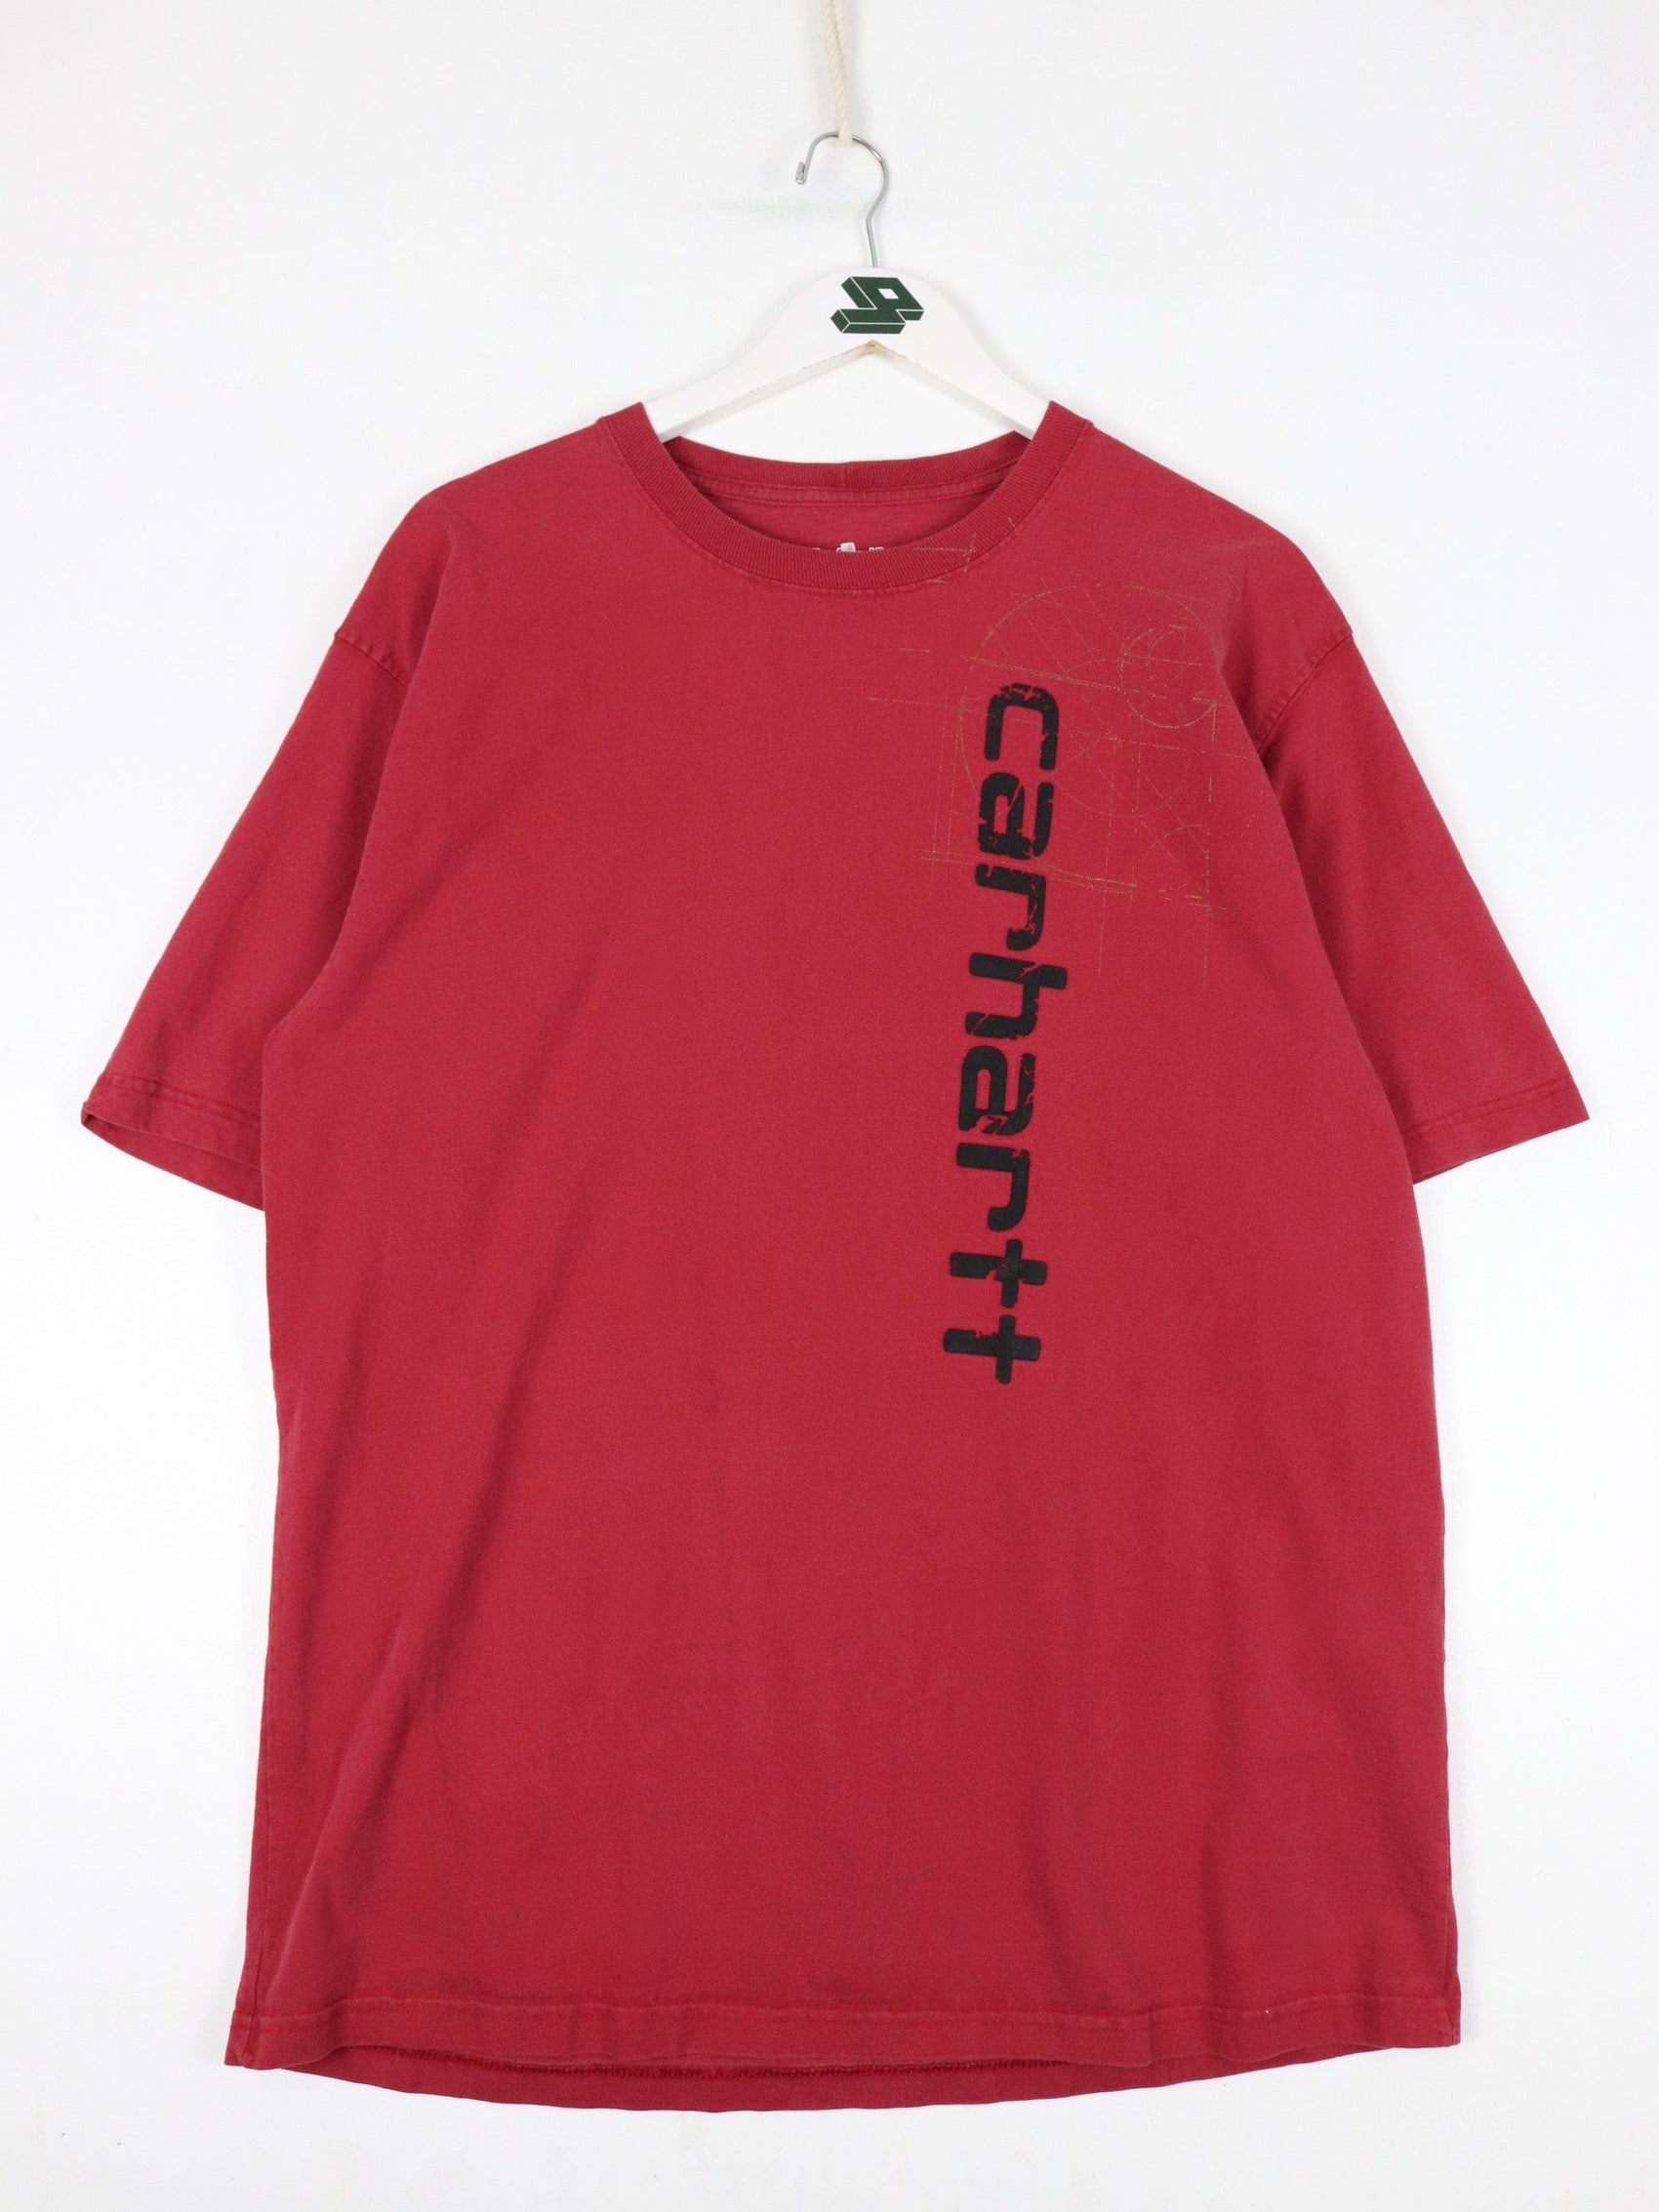 Carhartt T-Shirts & Tank Tops Carhartt T Shirt Mens Large Red